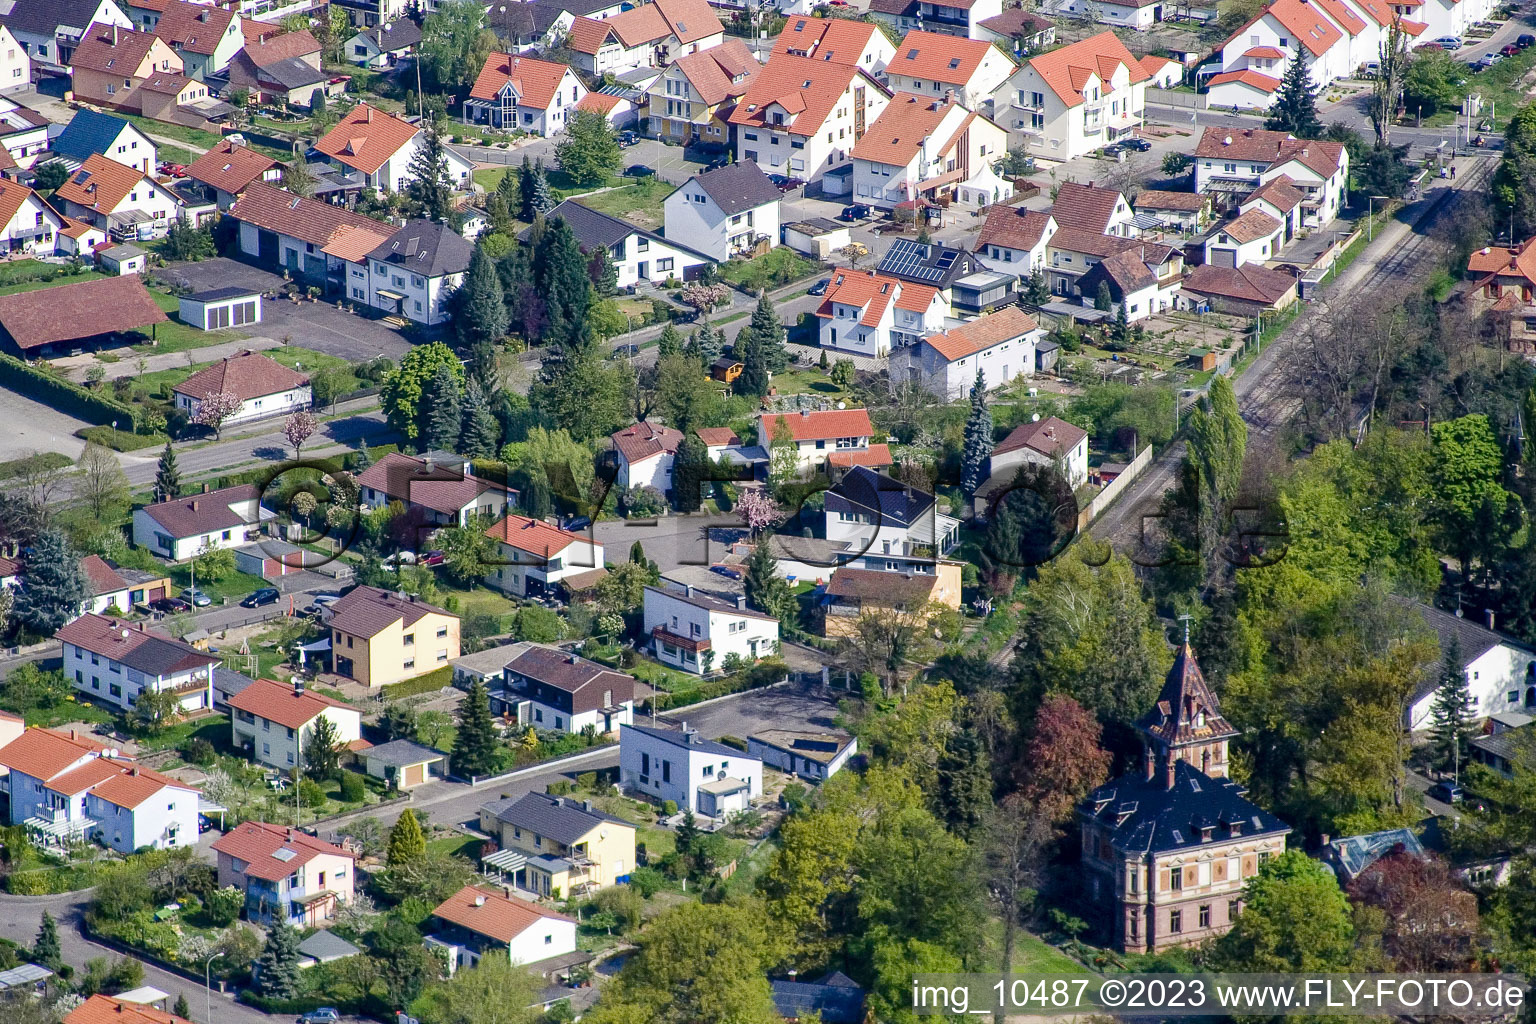 Aerial photograpy of Germersheimer Straße, Kandeler Straße in Jockgrim in the state Rhineland-Palatinate, Germany